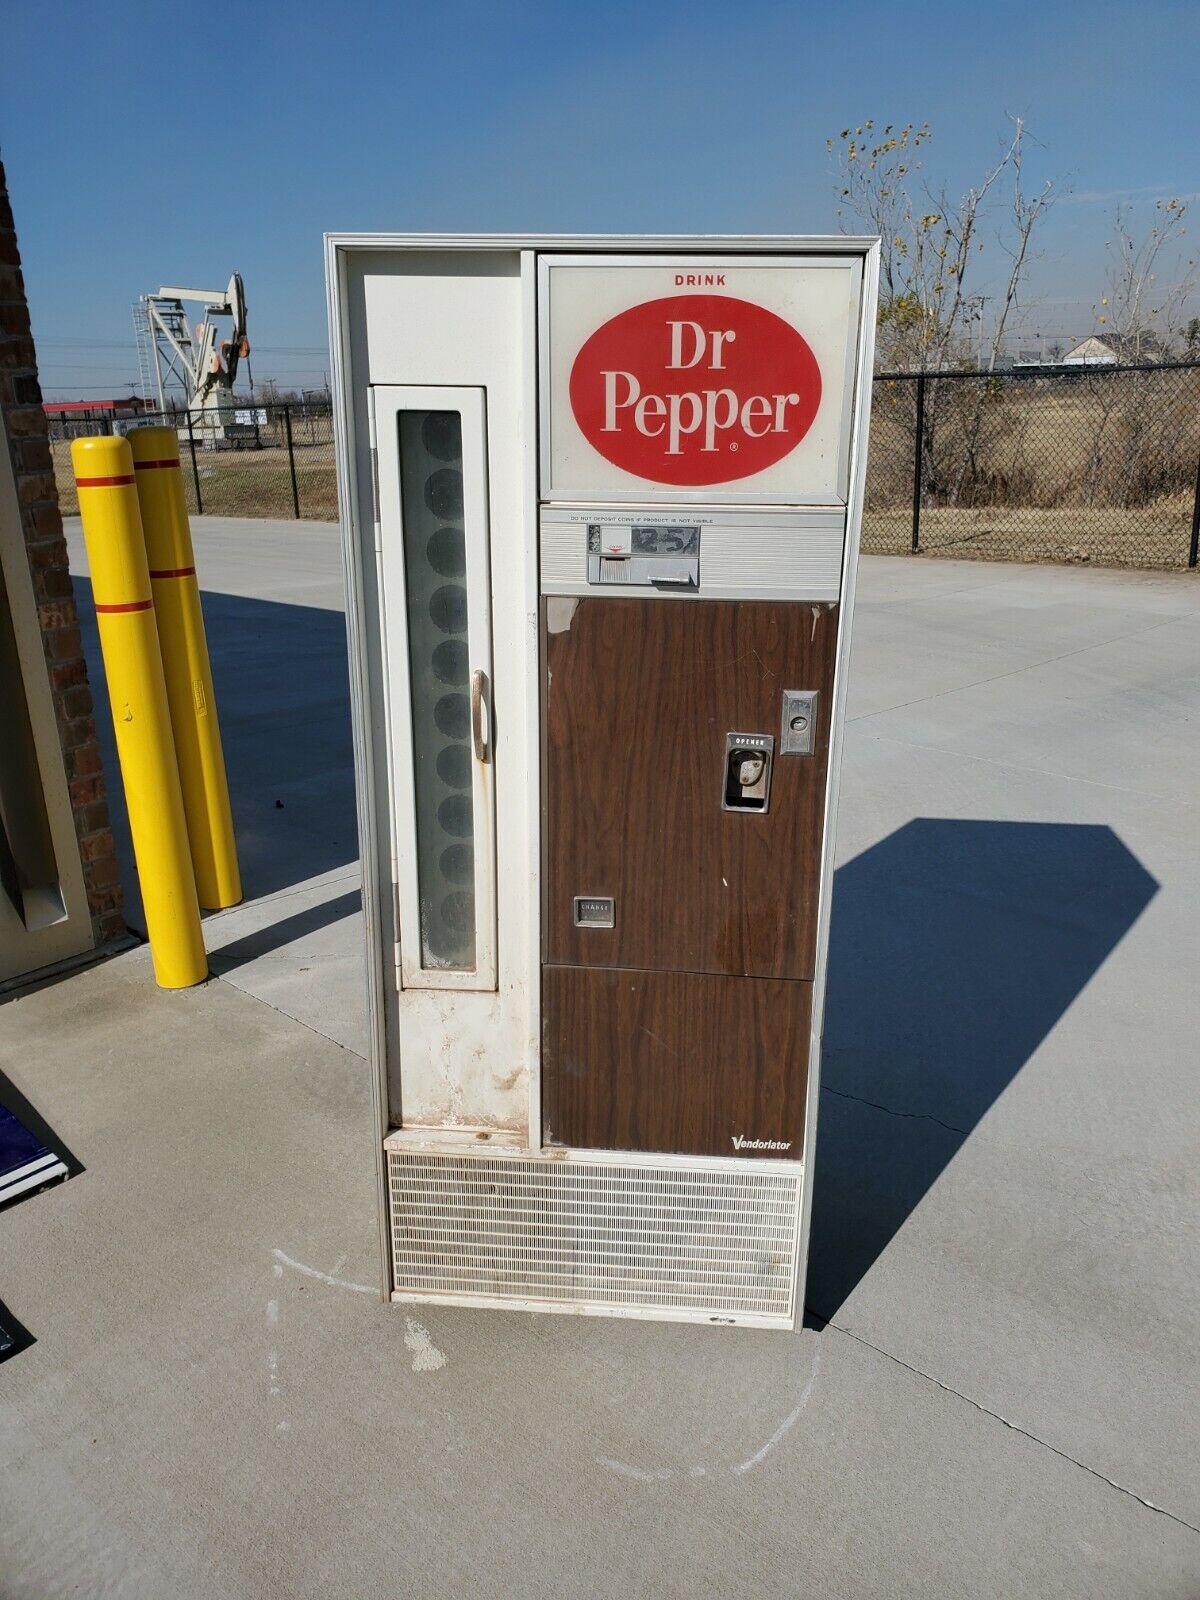 brent kirchner share antique dr pepper machine photos